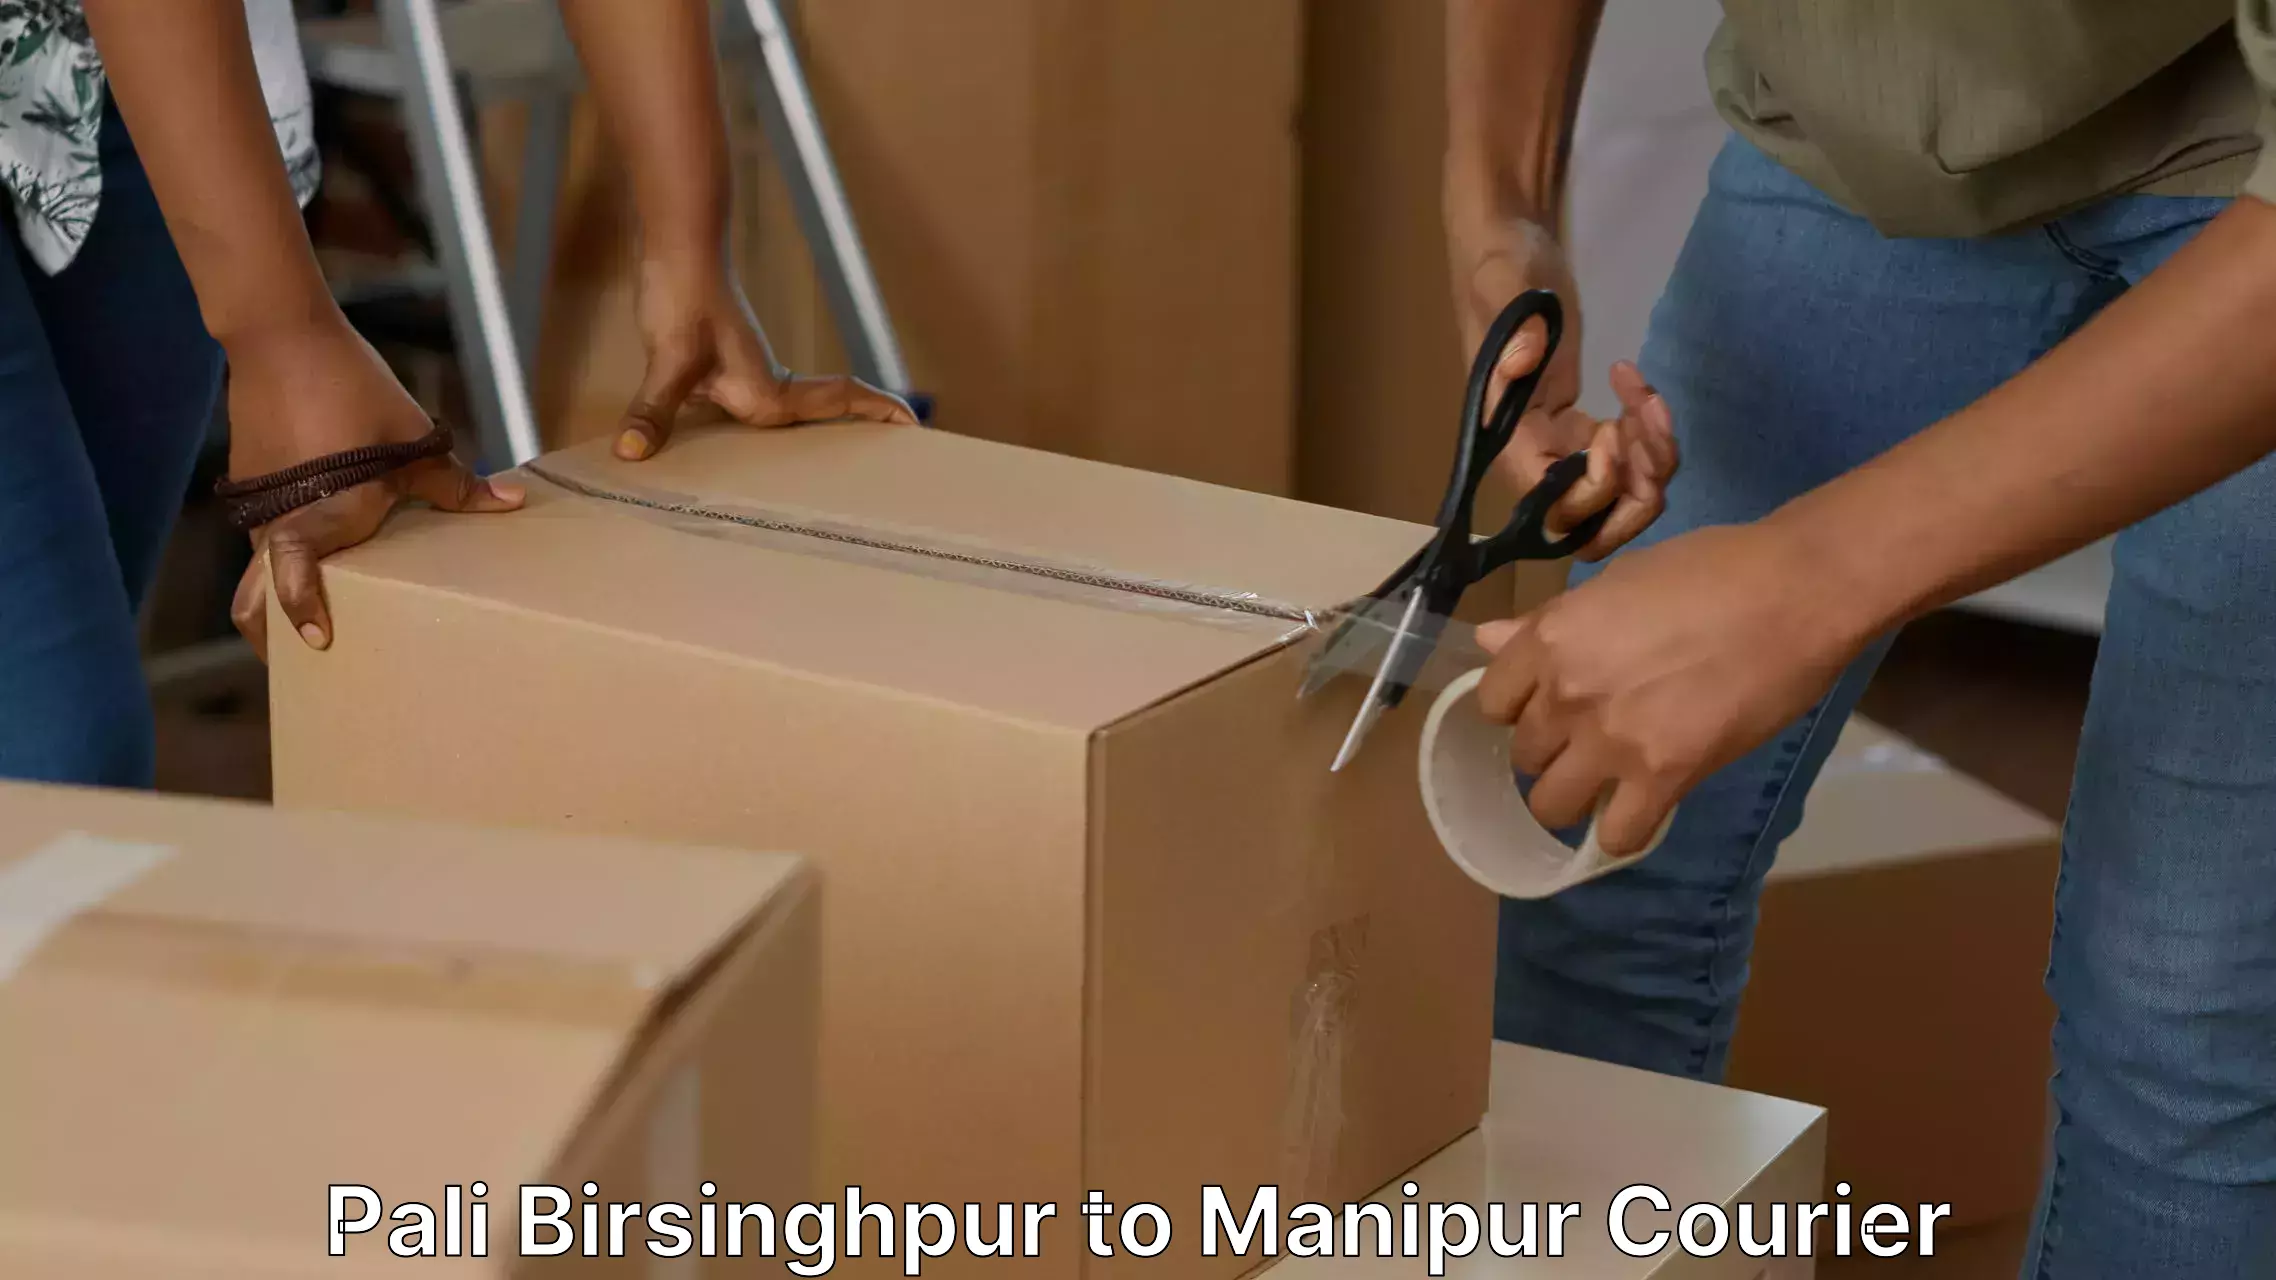 Furniture transport service Pali Birsinghpur to Manipur